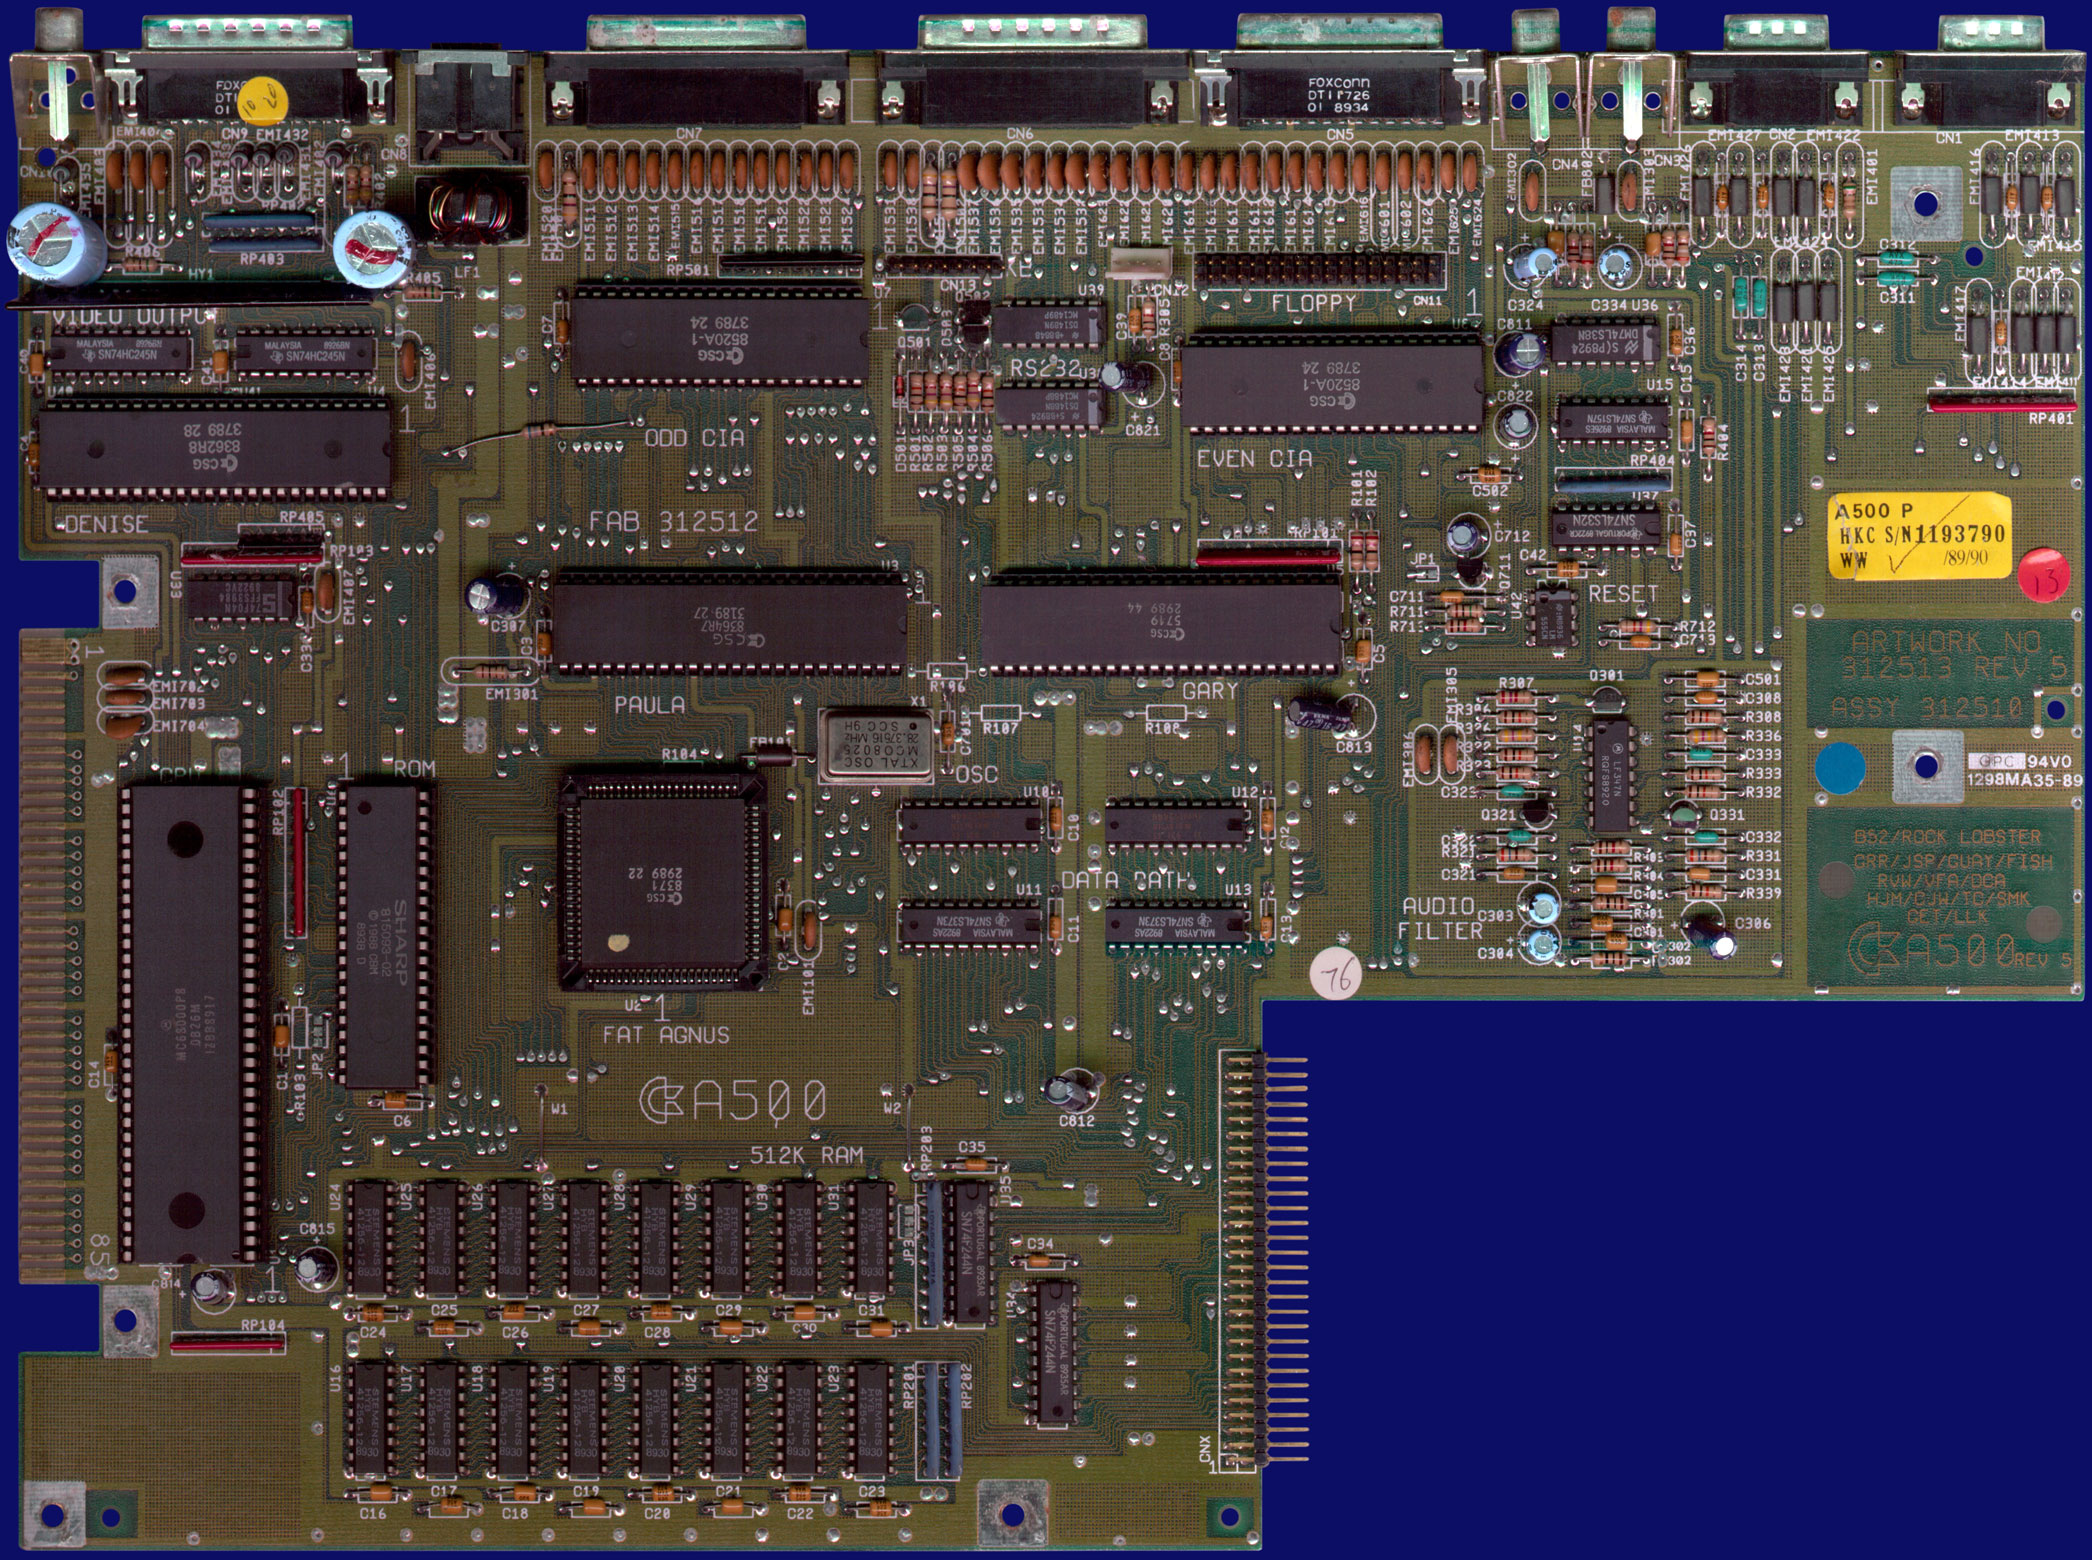 Commodore Amiga 500 & 500+ - Rev 5 motherboard, front side